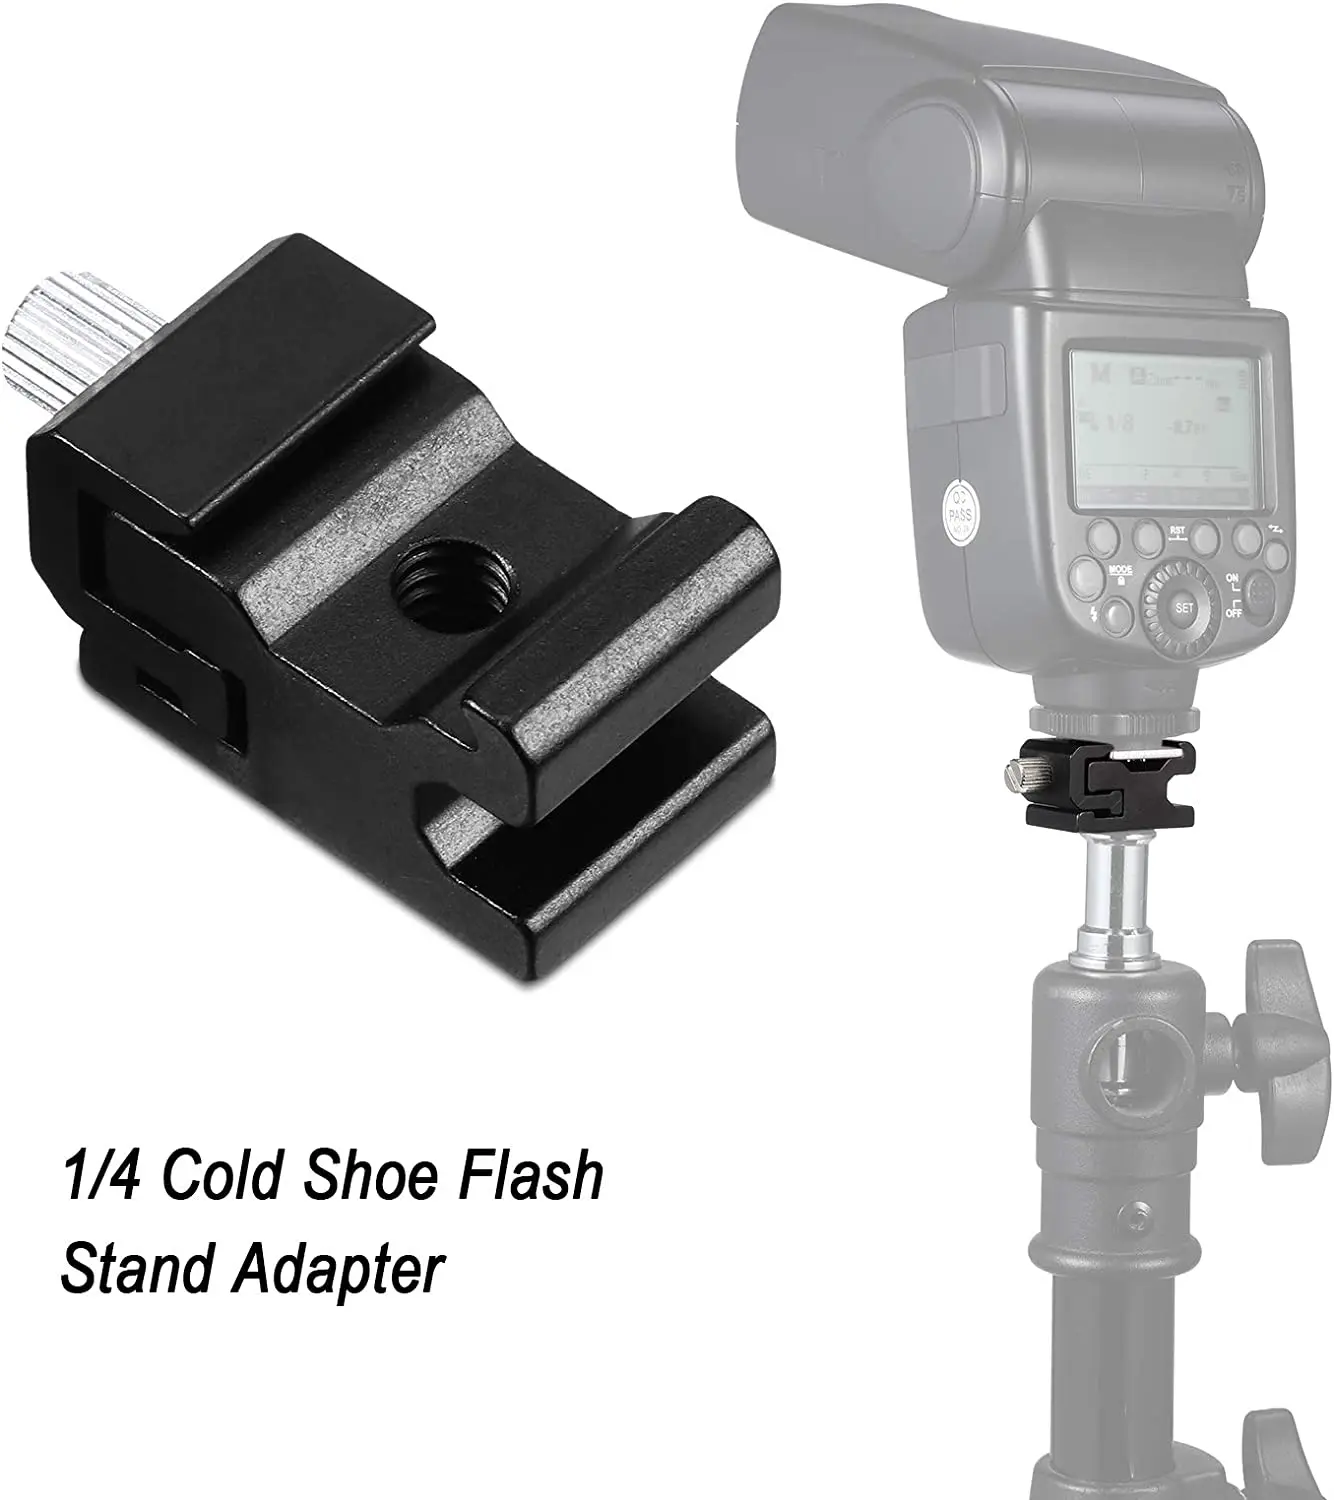 8шт 1/4-inčni Adapter za pričvršćenje hladno kopče + Komplet adaptera za podmetače za bljeskalice s vrućim башмаком za postavljanje fotoaparata DSLR, nosač za bljeskalicu za Stativ Slika 2